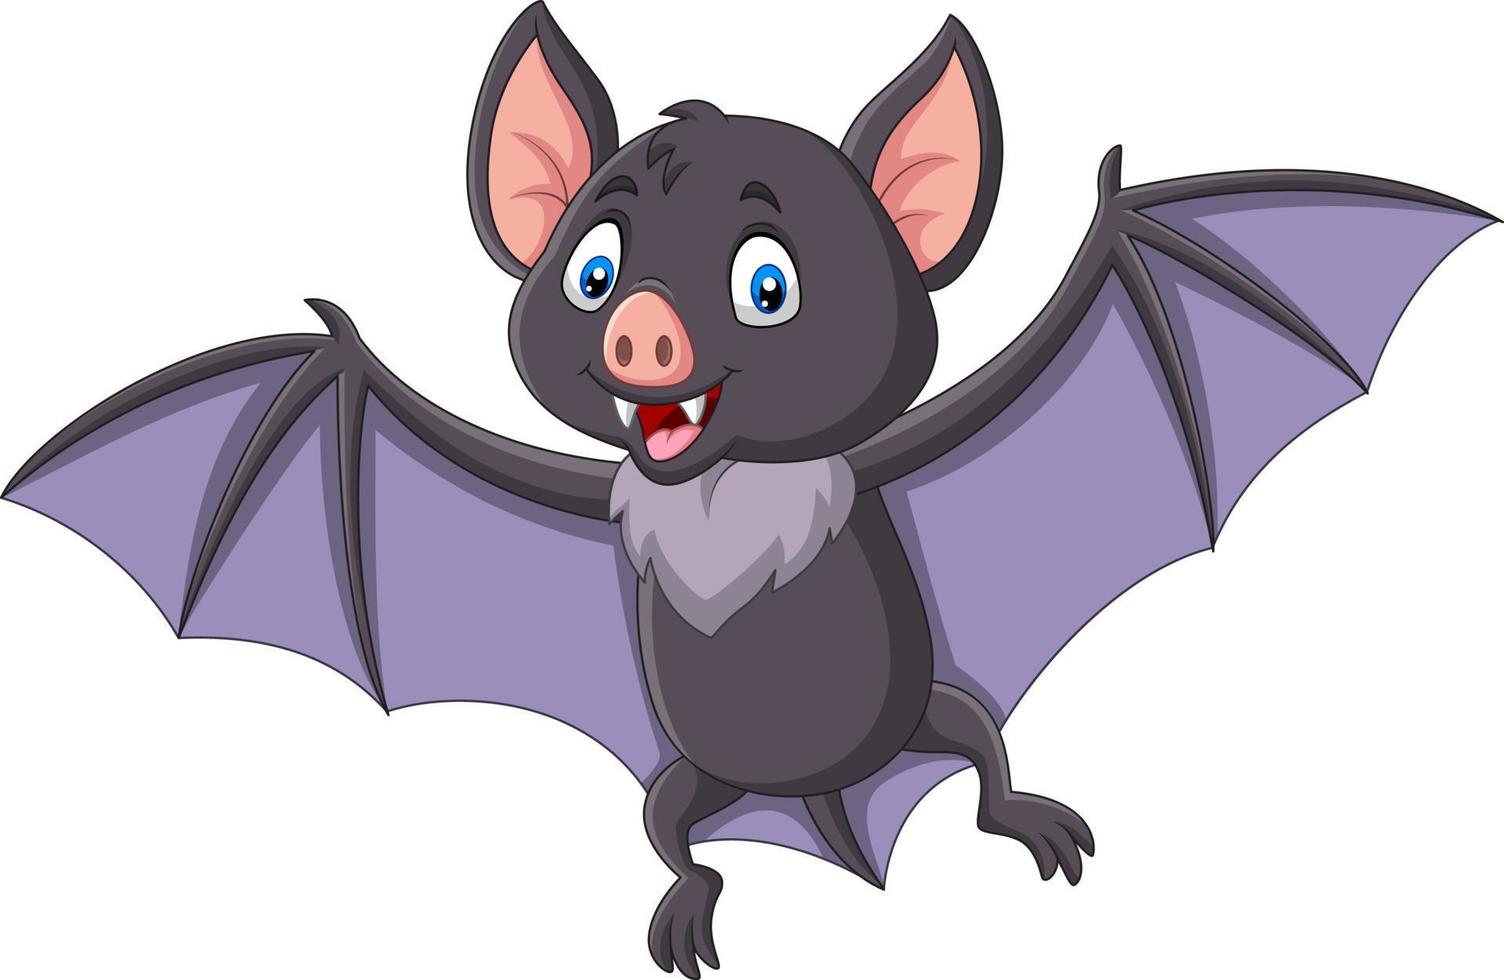 Cartoon bat isolated on white background vector